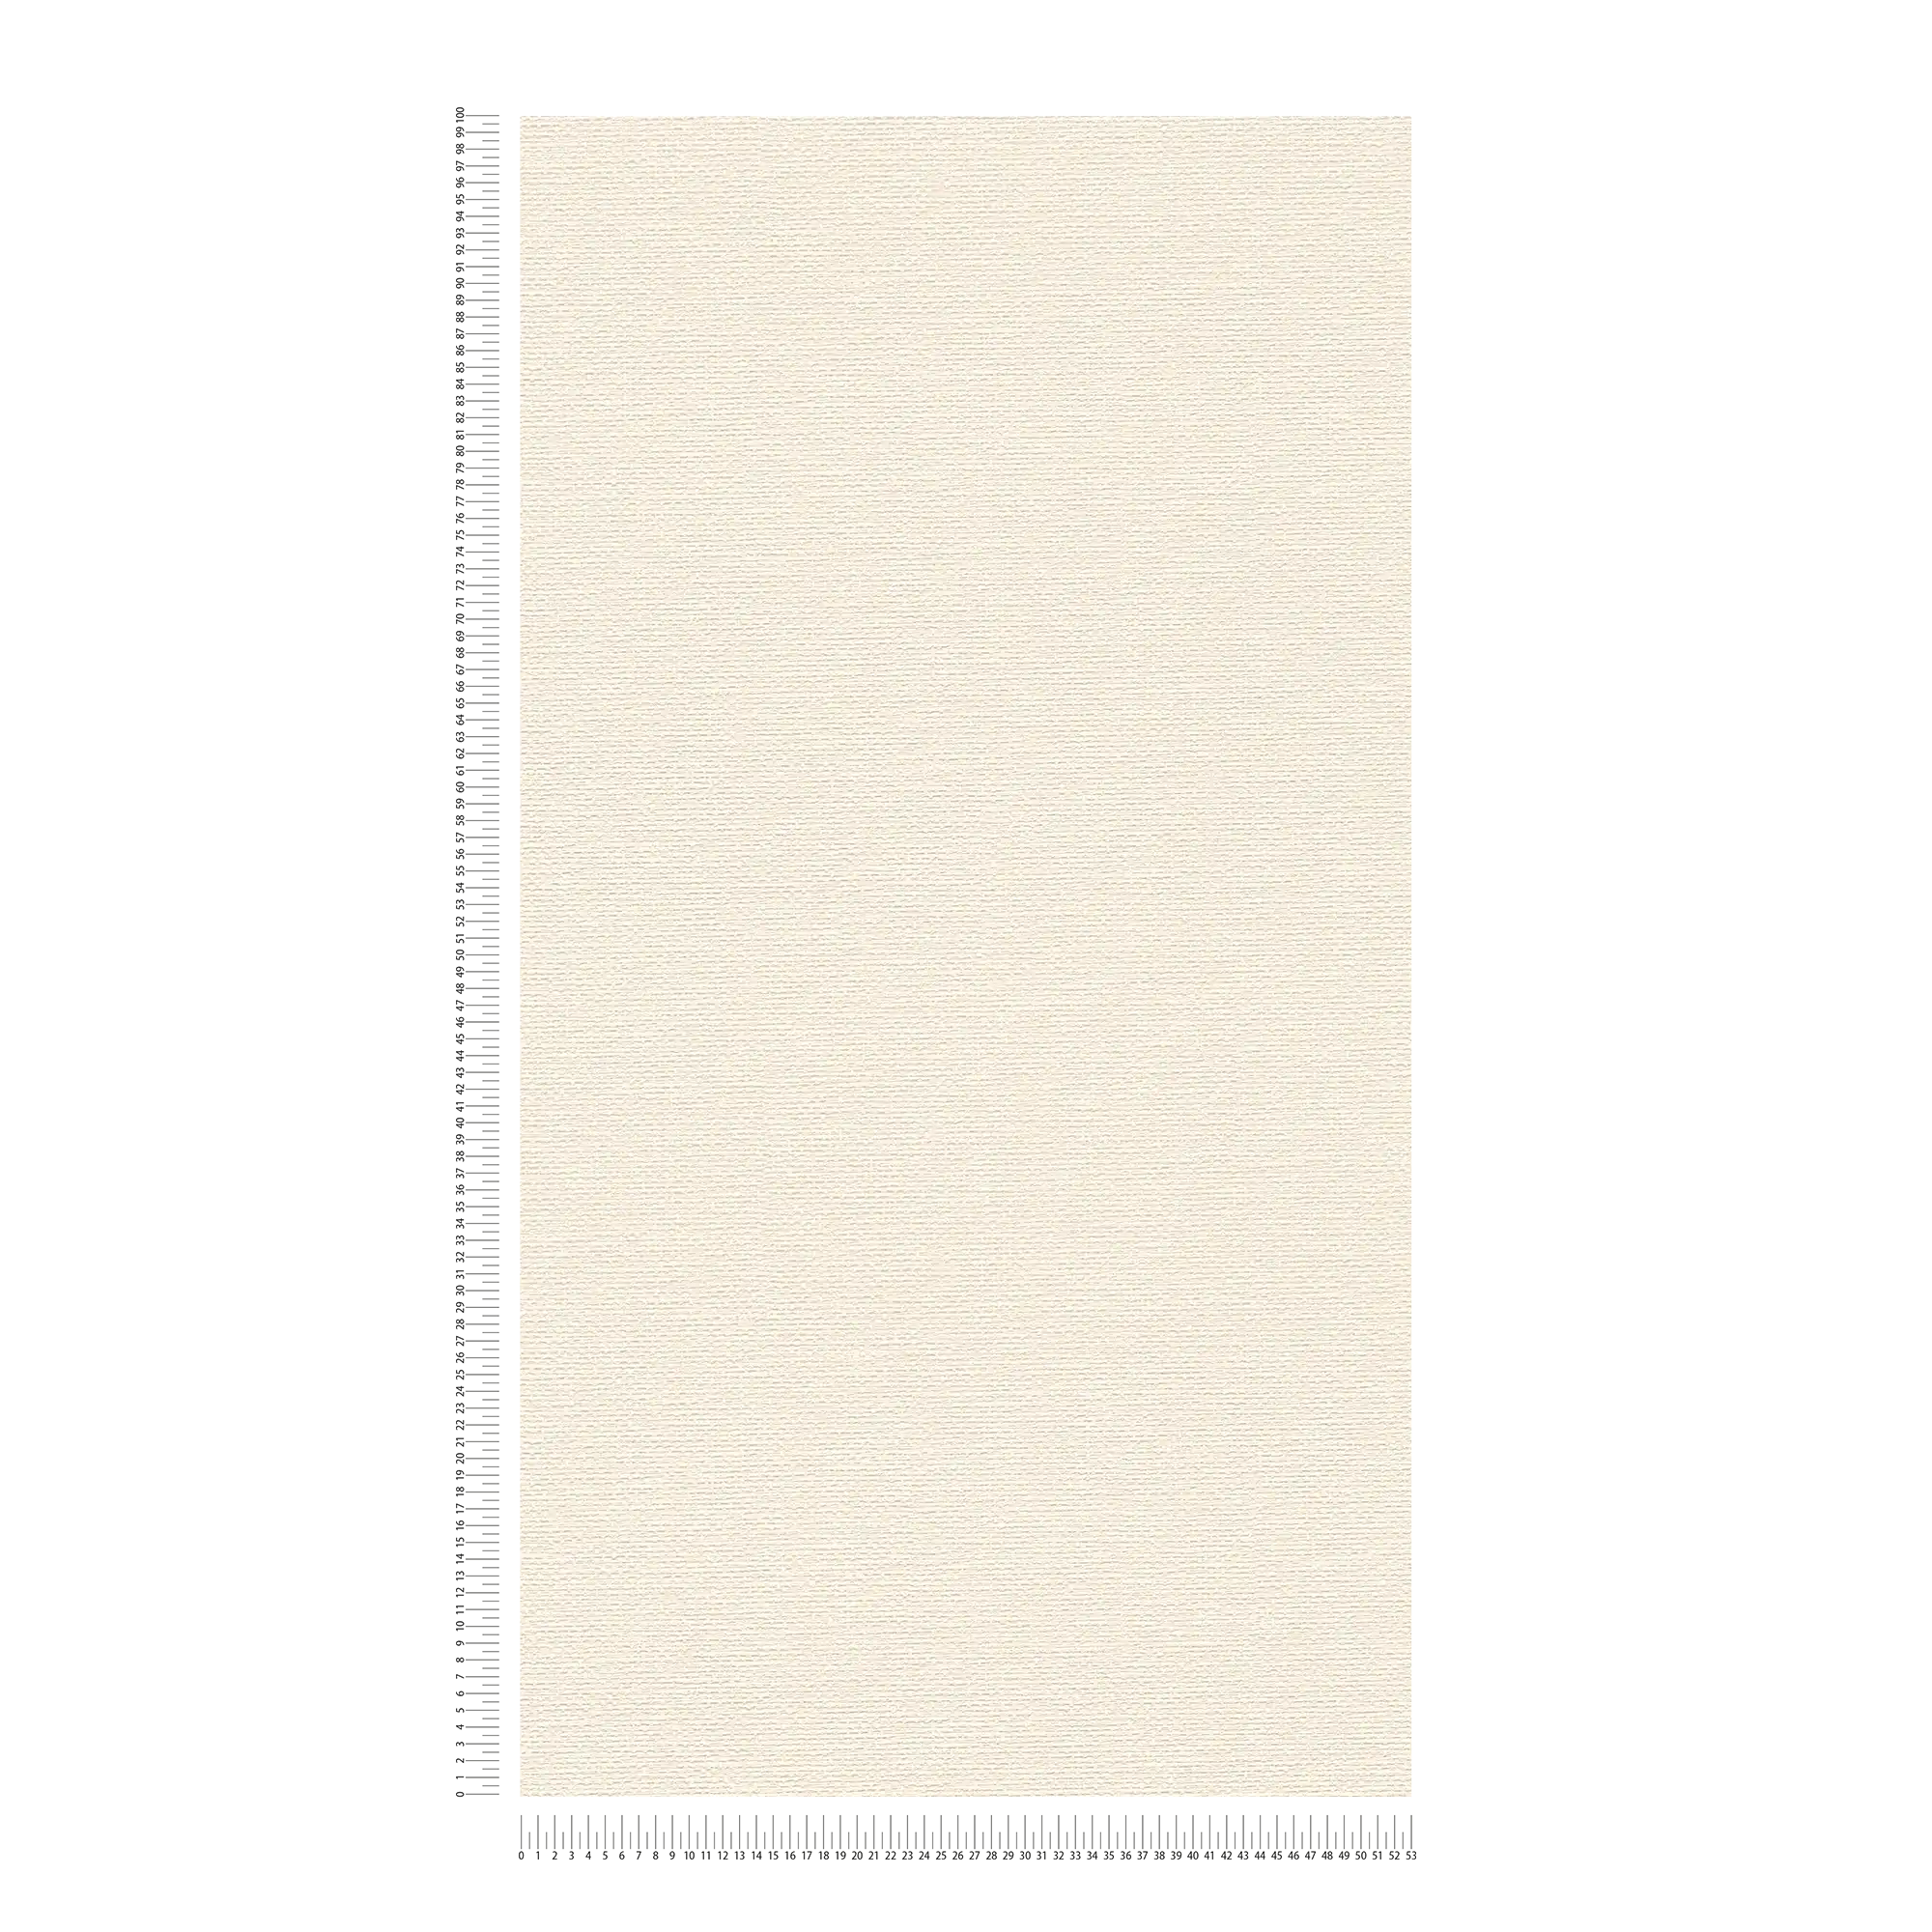             Scandi style fabric texture wallpaper - cream, white
        